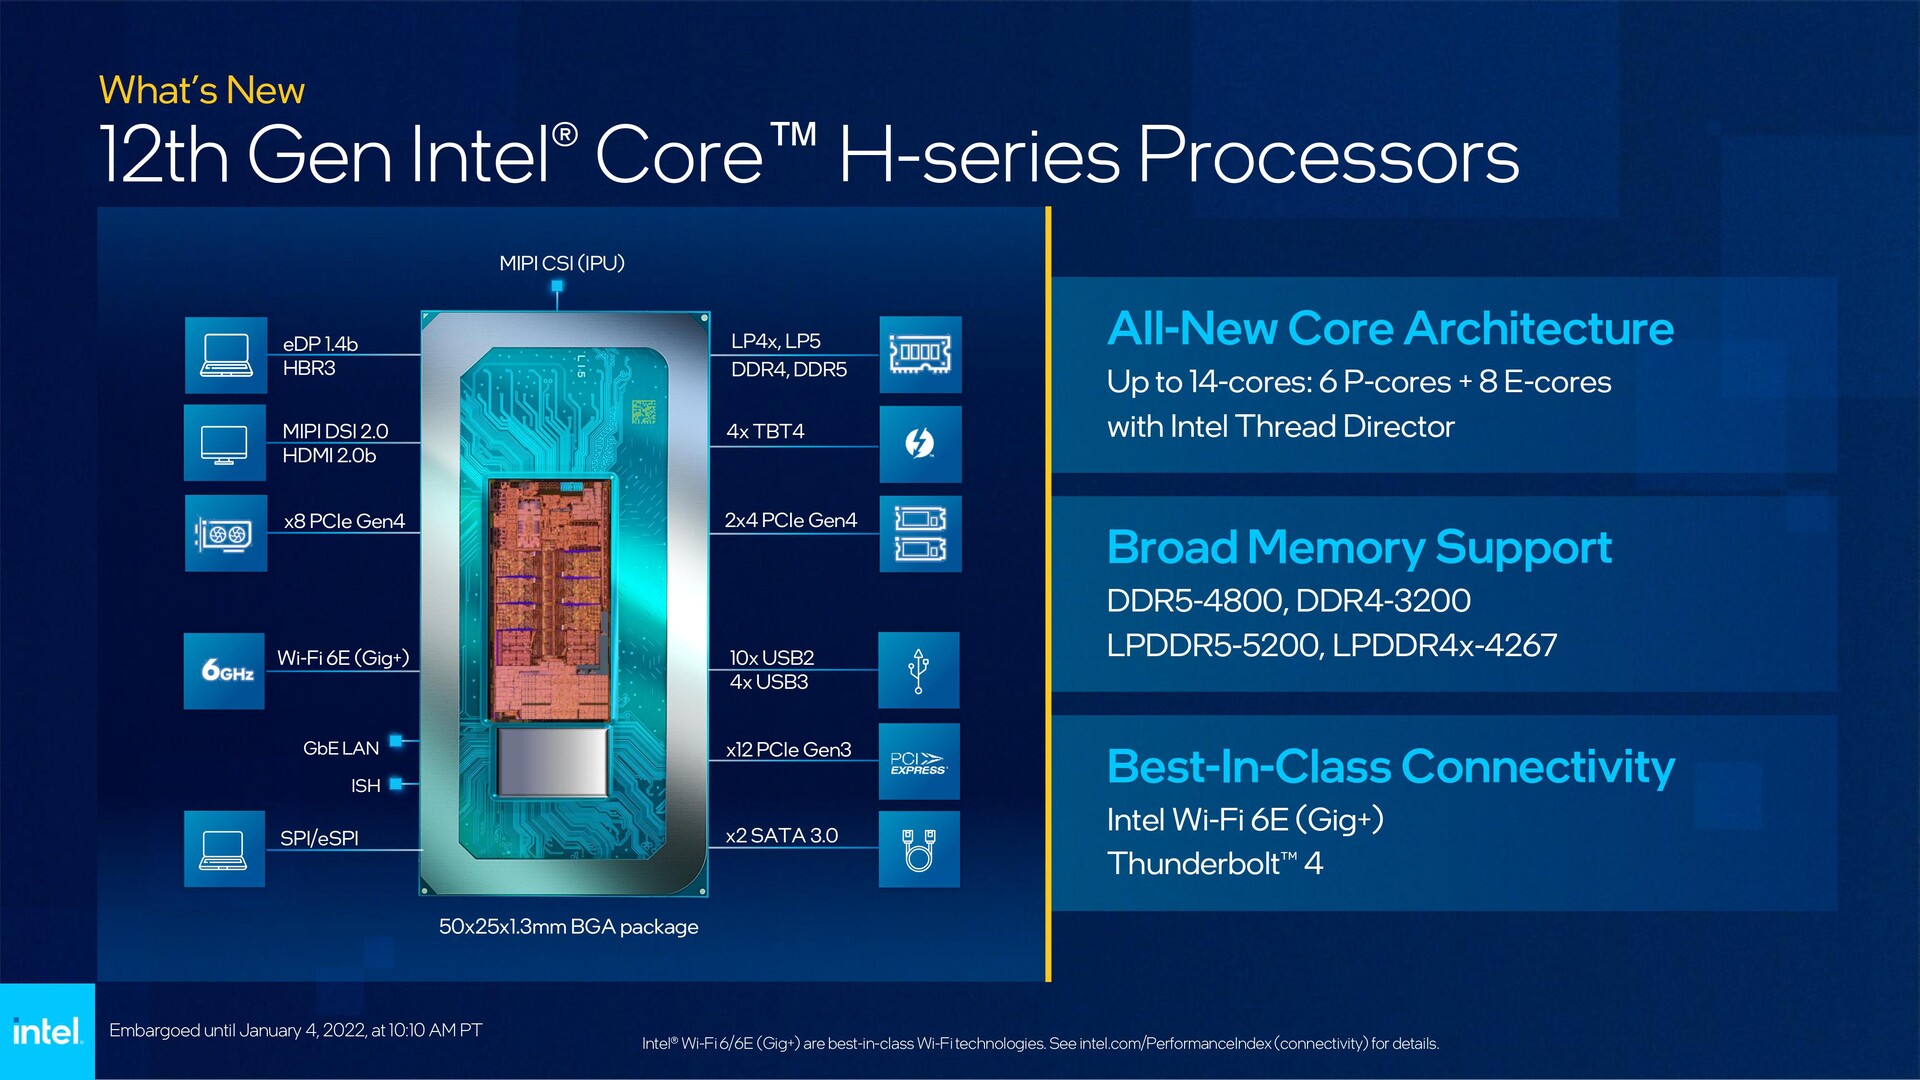 12th Gen Intel Core Processor (code-named Alder Lake S-series and H-series) 